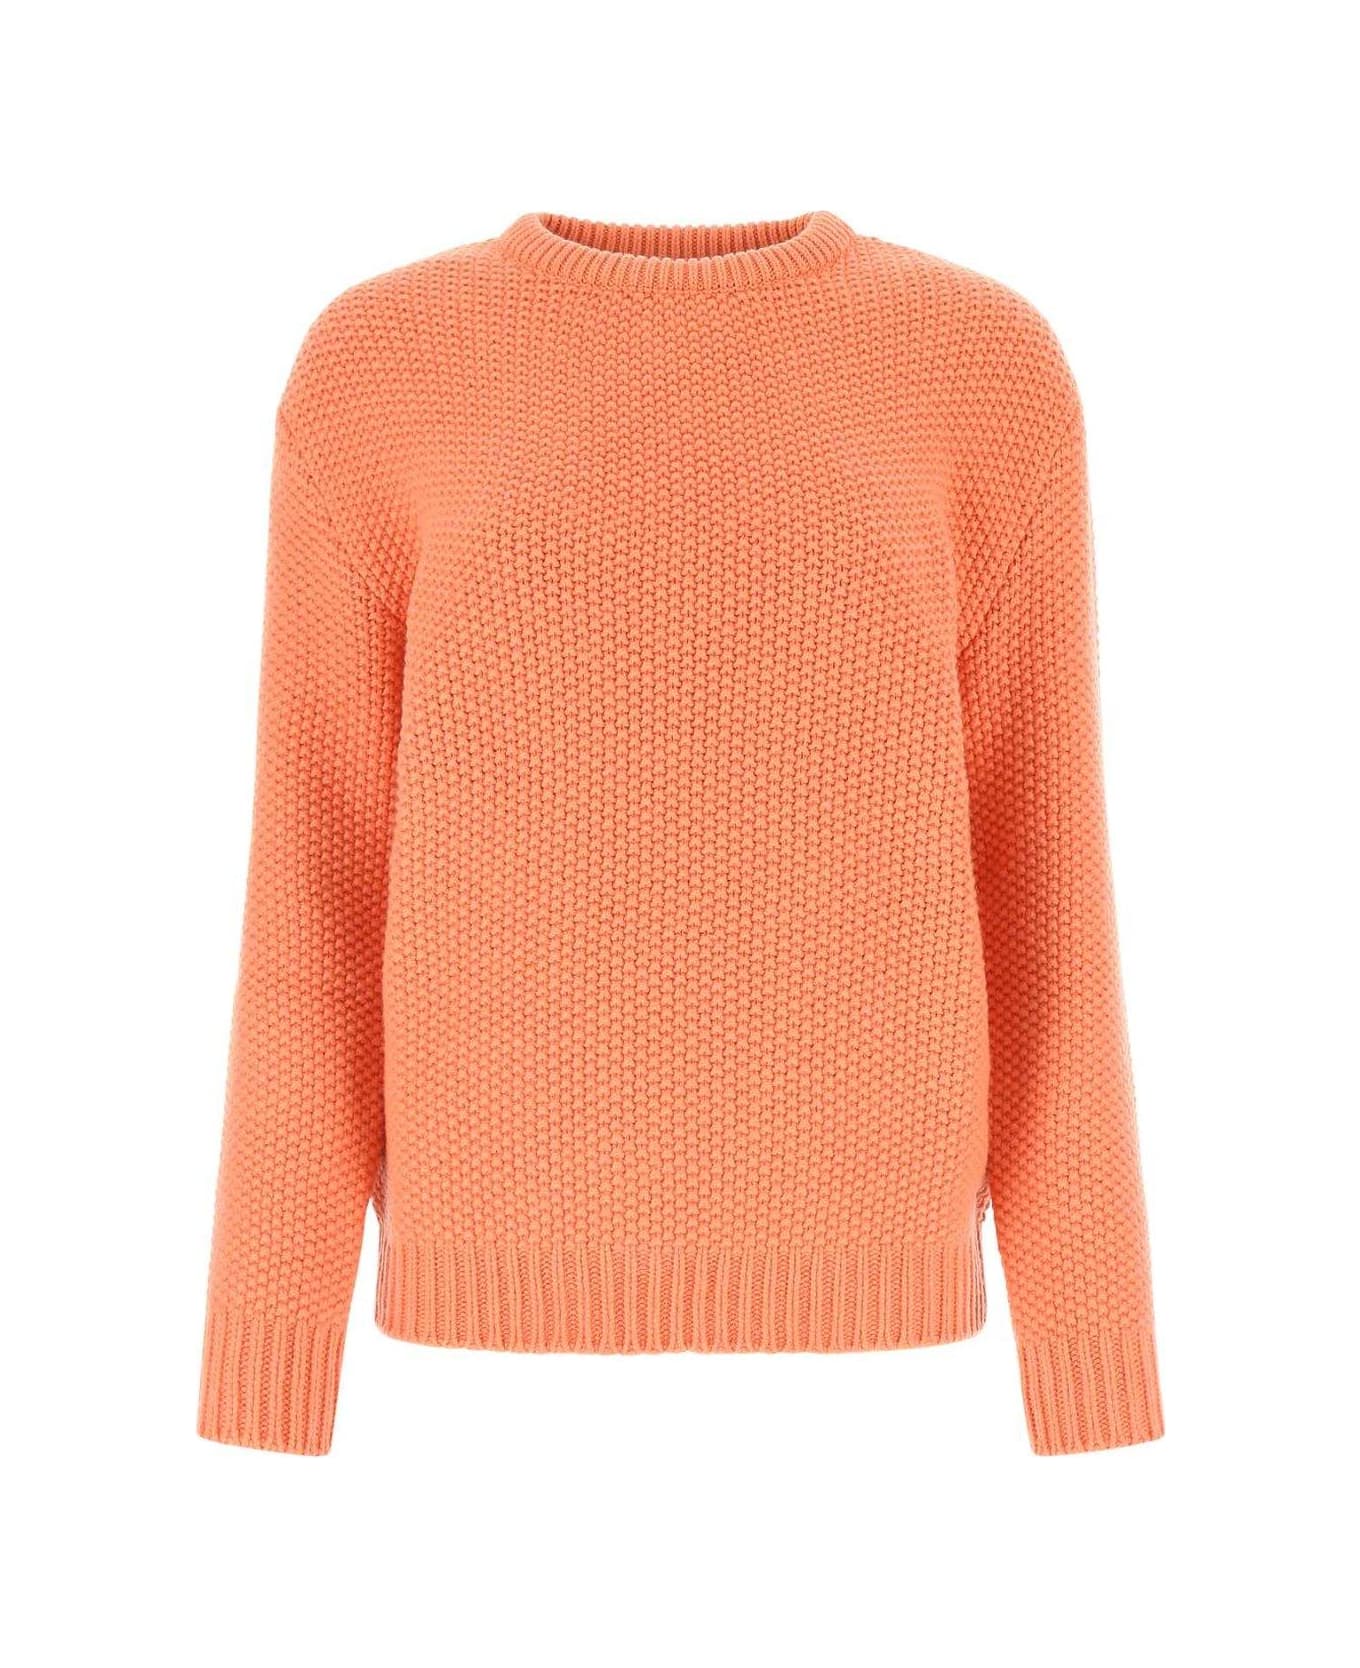 Chloé Crewneck Knitted Jumper - Papaya orange